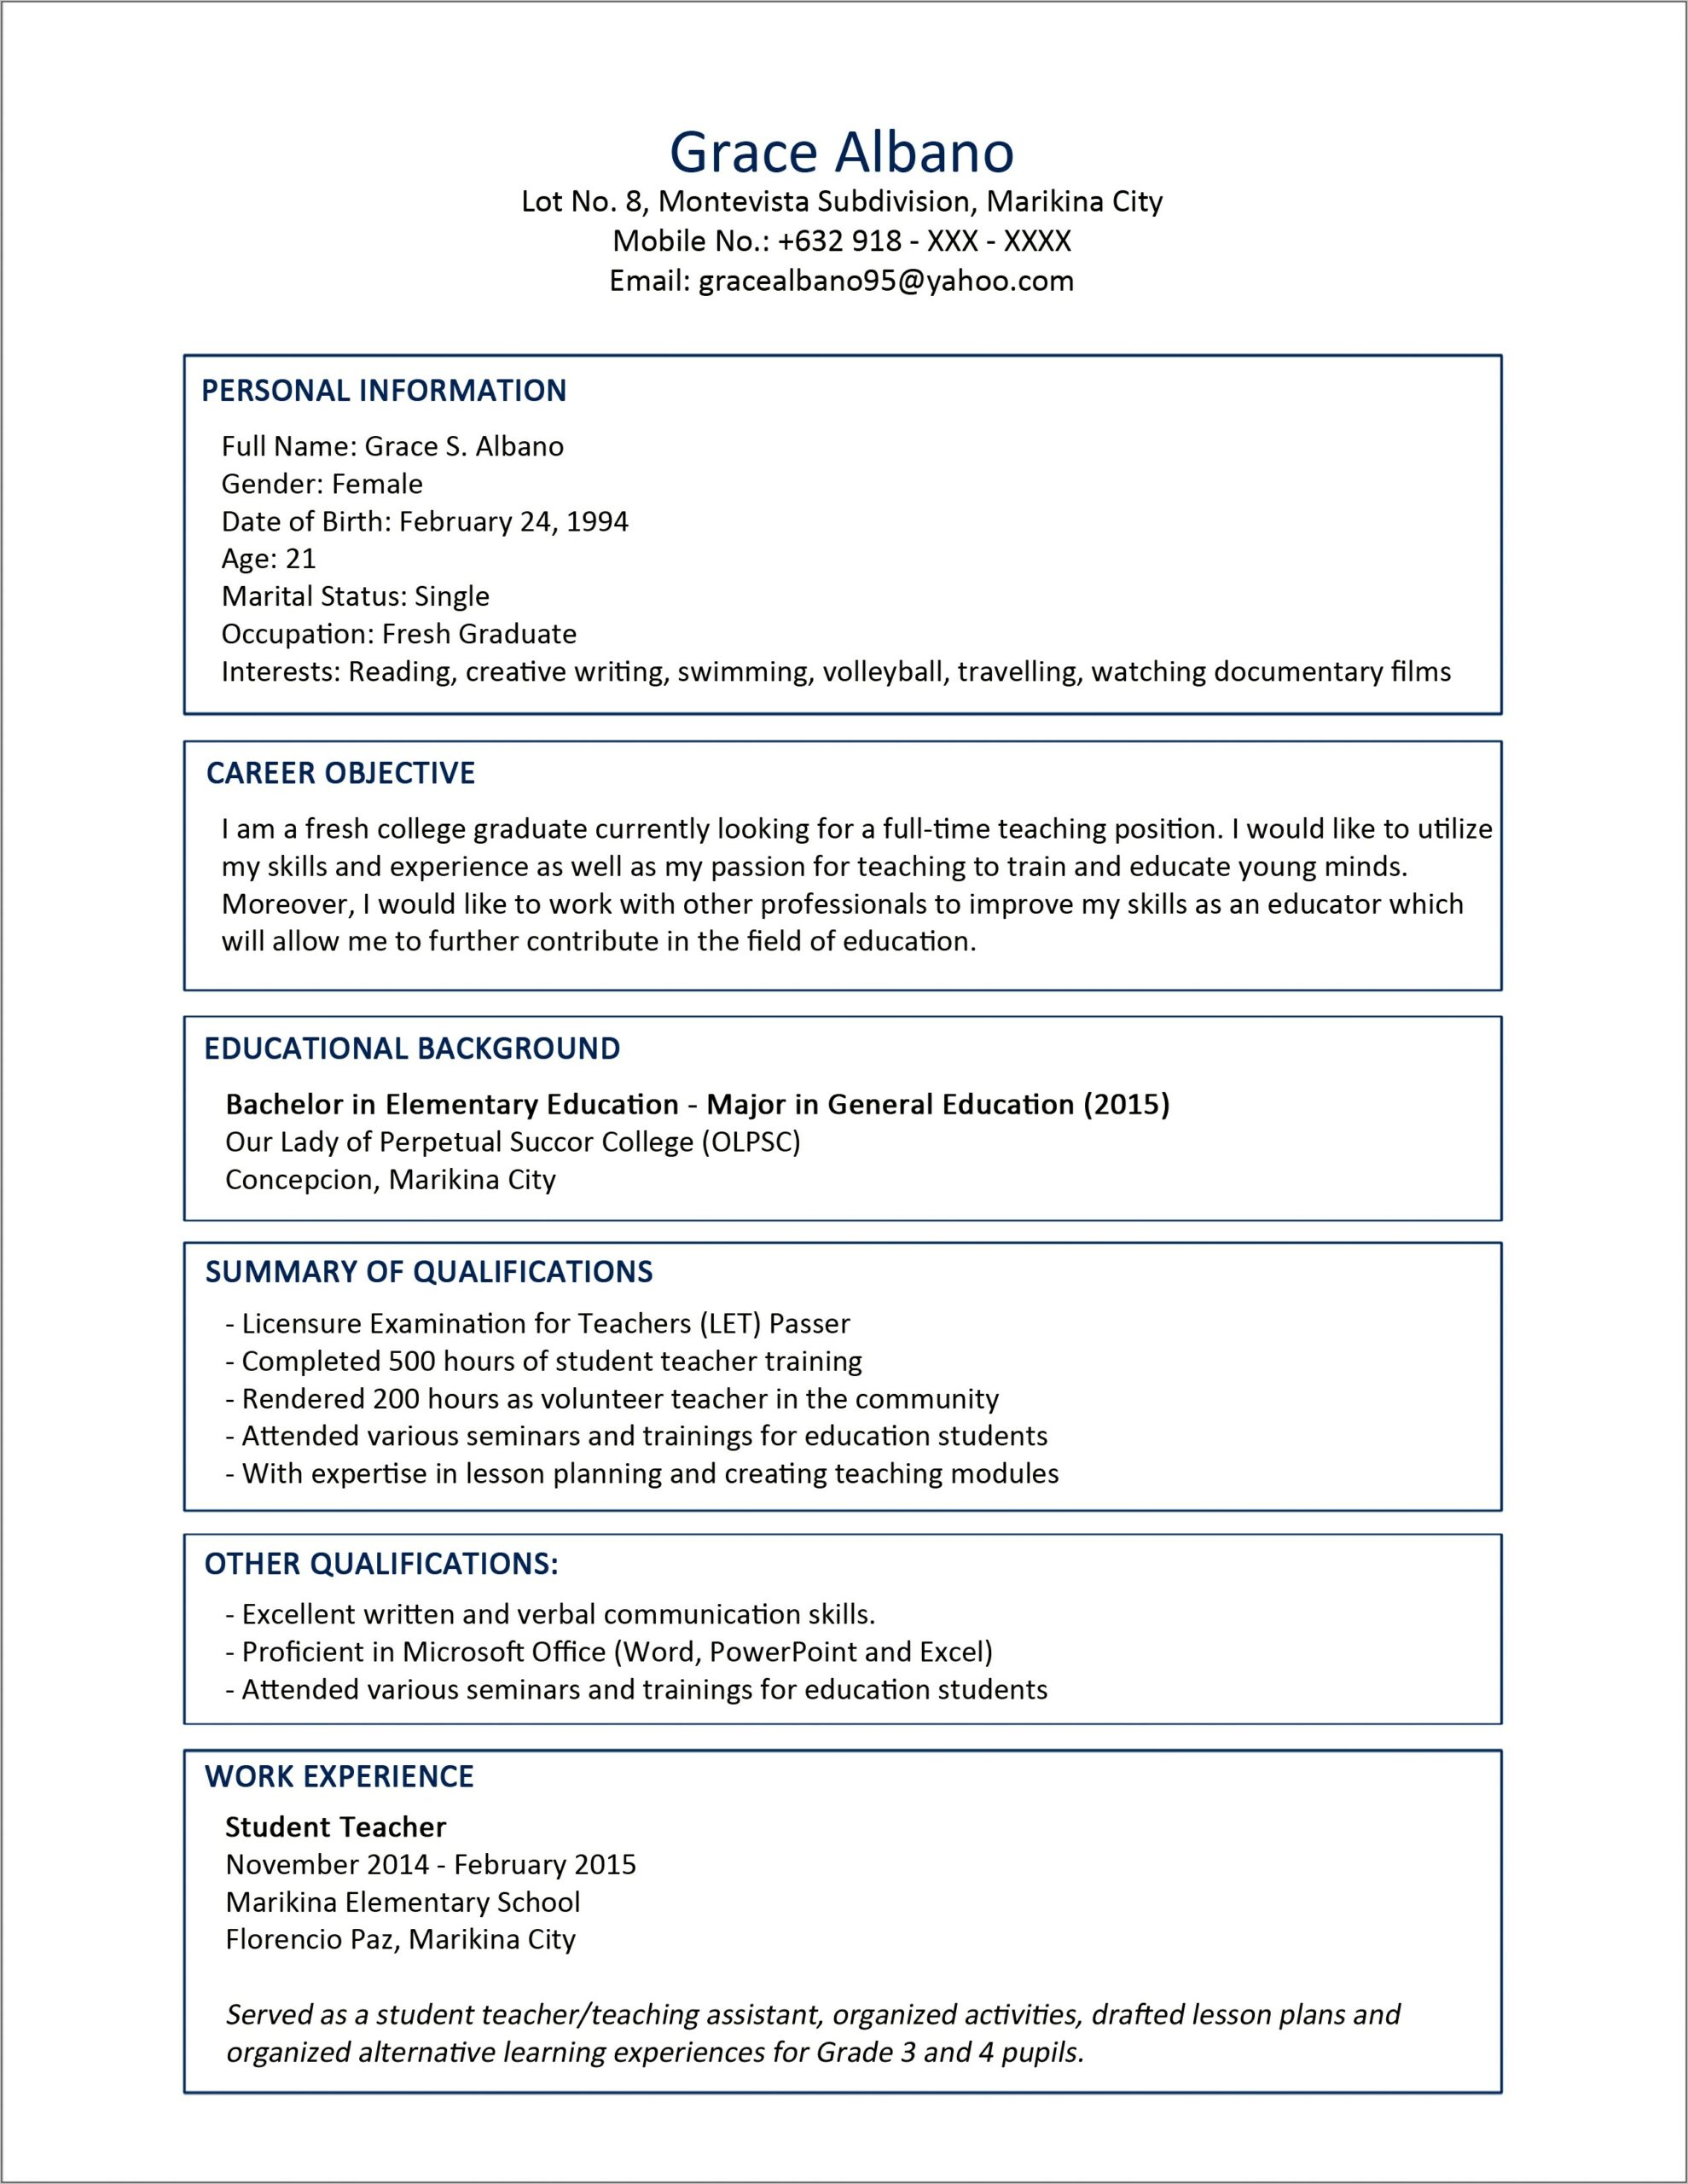 Sample Experience Description Third Grade Education Resume